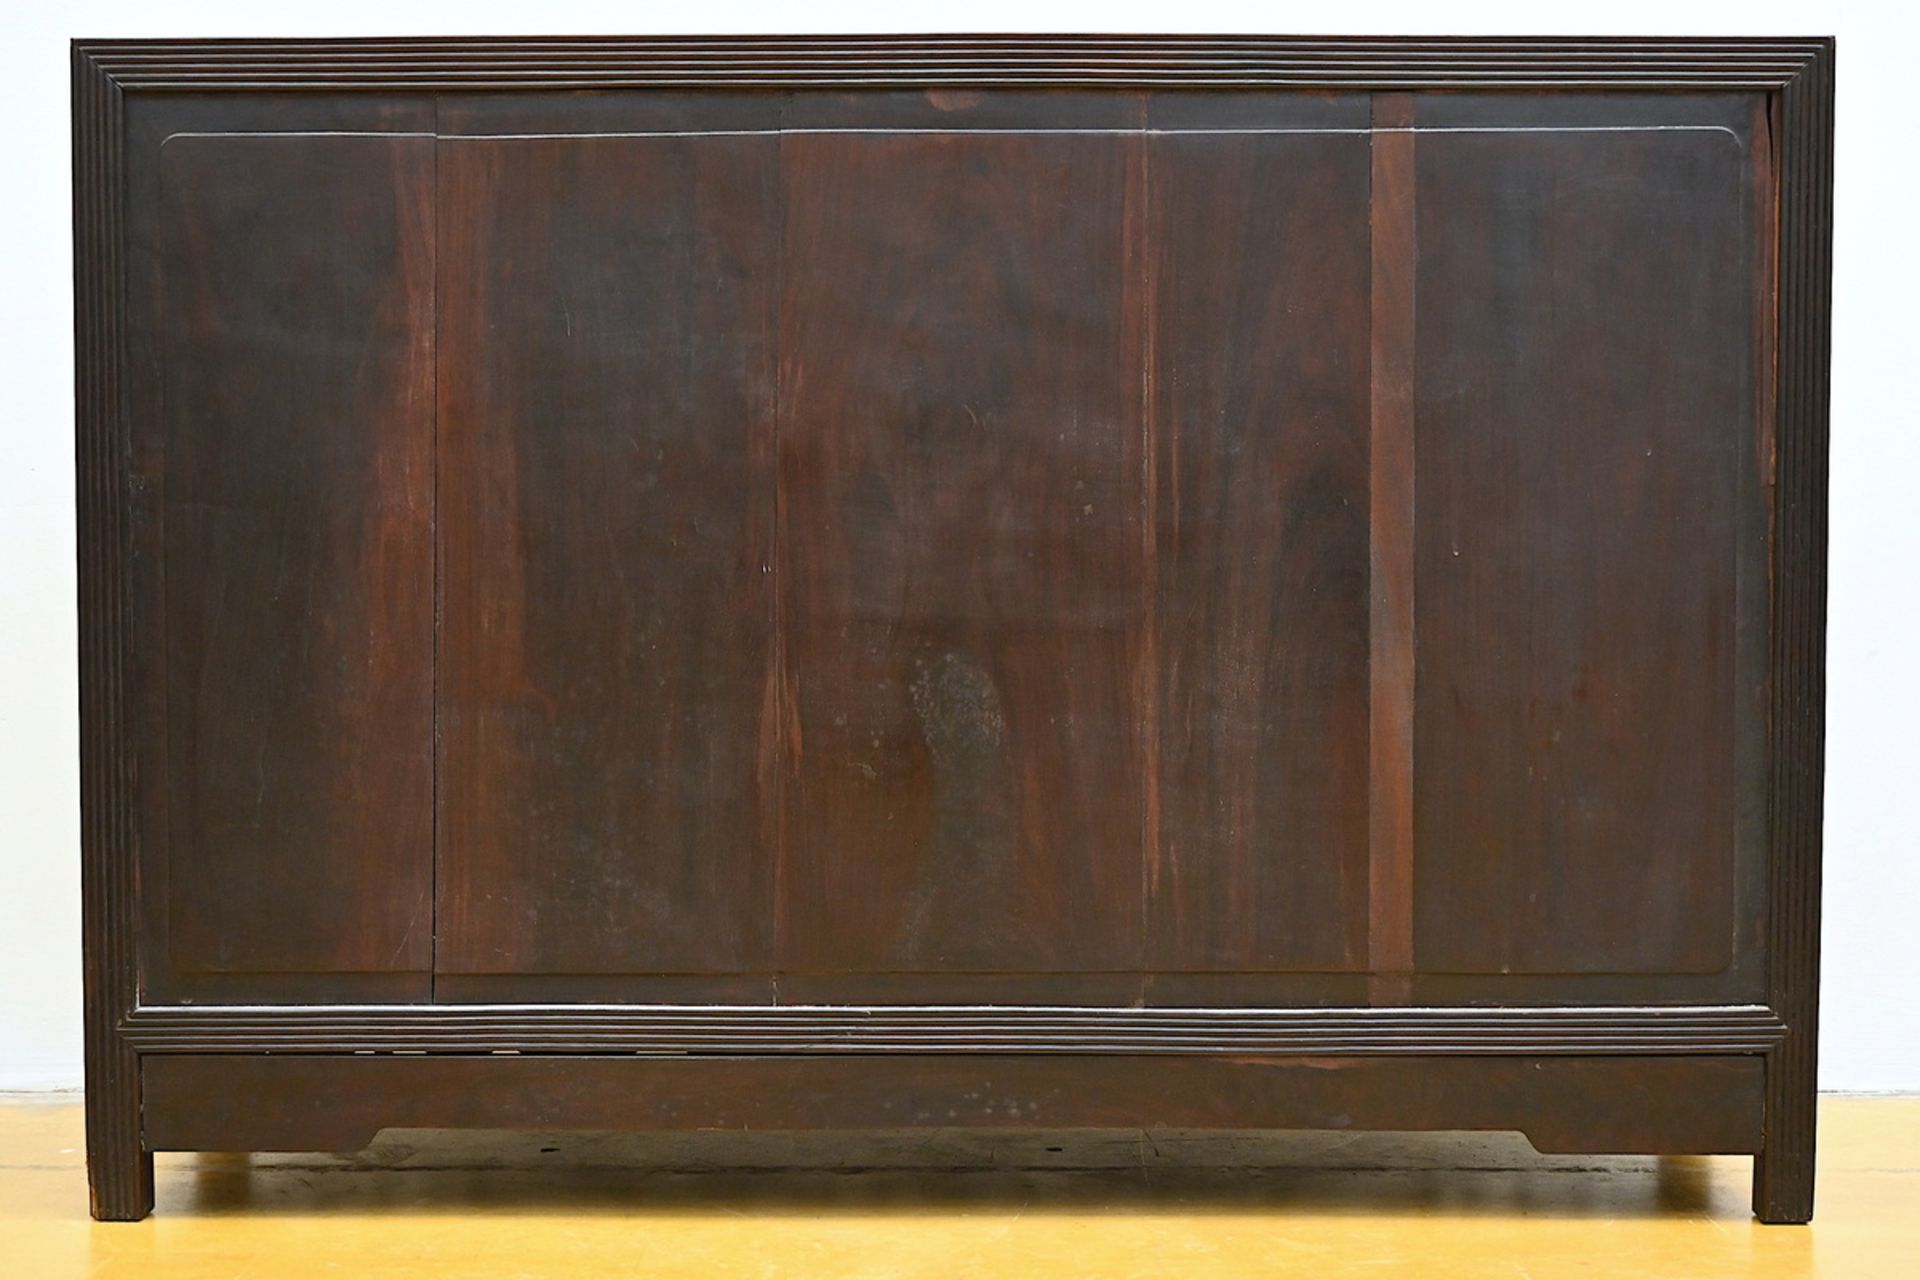 Two-door cabinet in hardwood, China 19th century (86x126x40cm) - Image 7 of 7